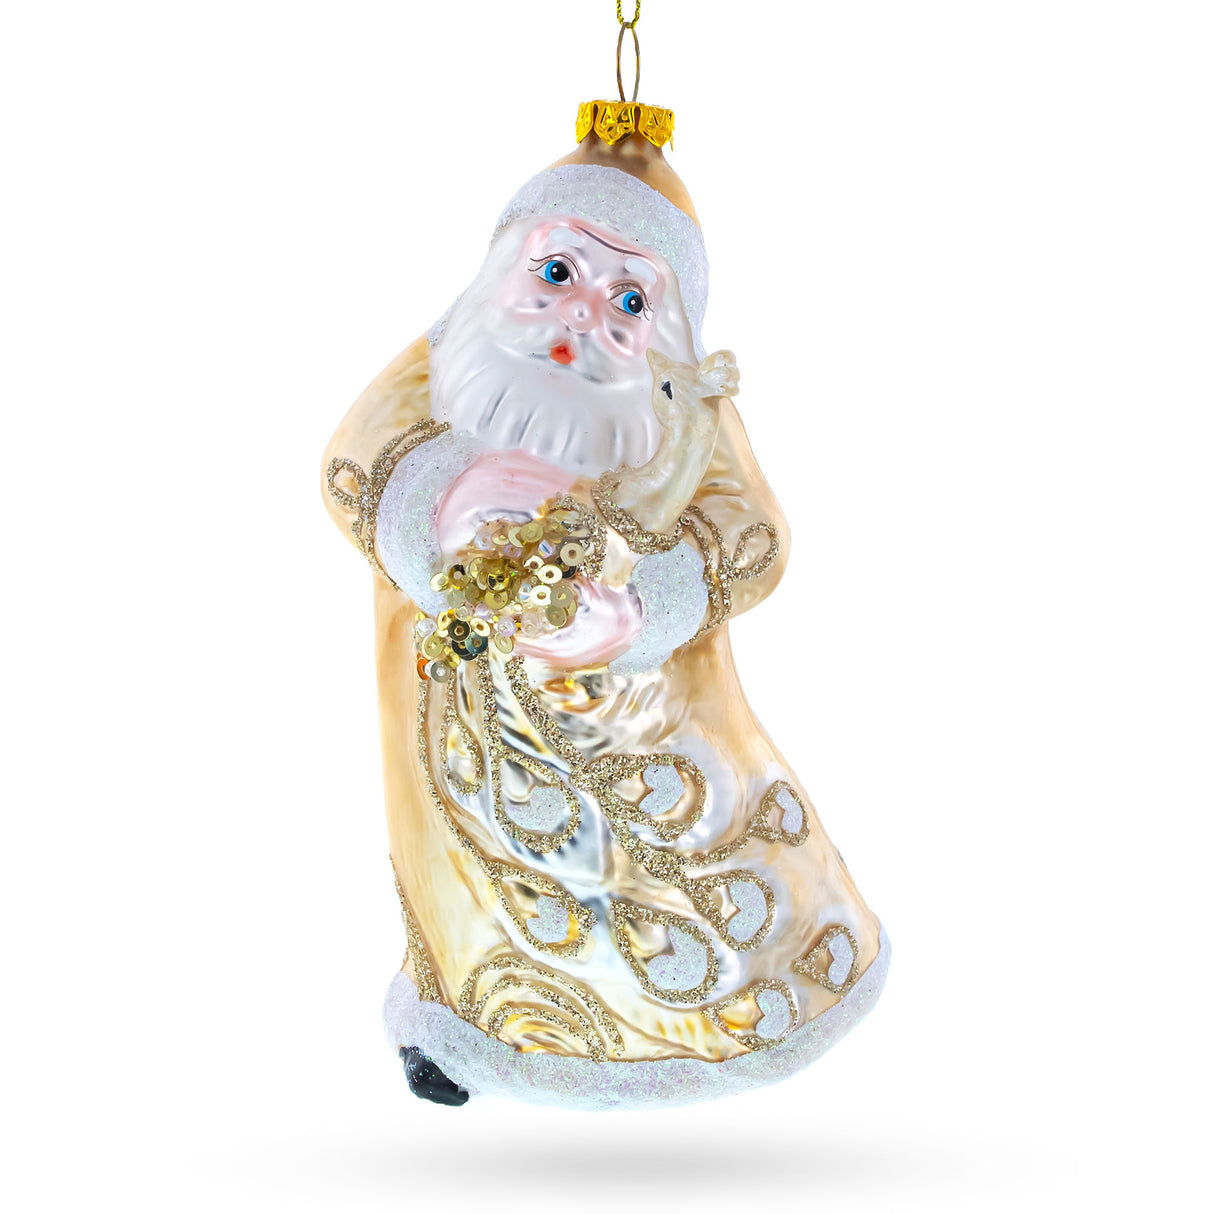 Santa in Golden Coat Blown Glass Christmas Ornament in White color,  shape